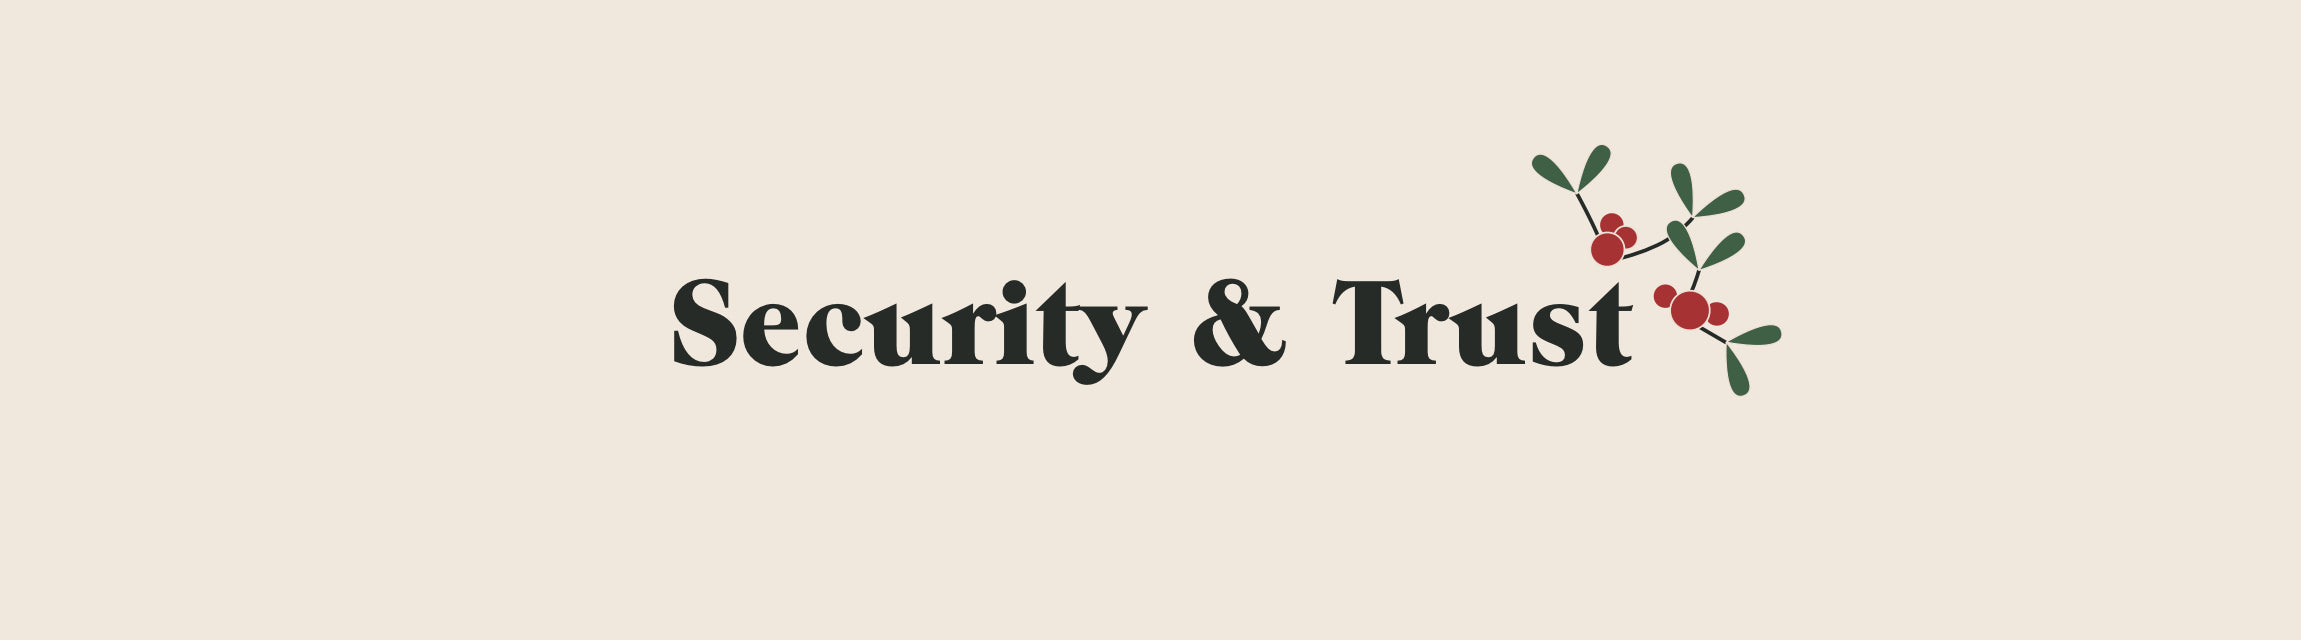 Security & Trust title with mistletoe icon